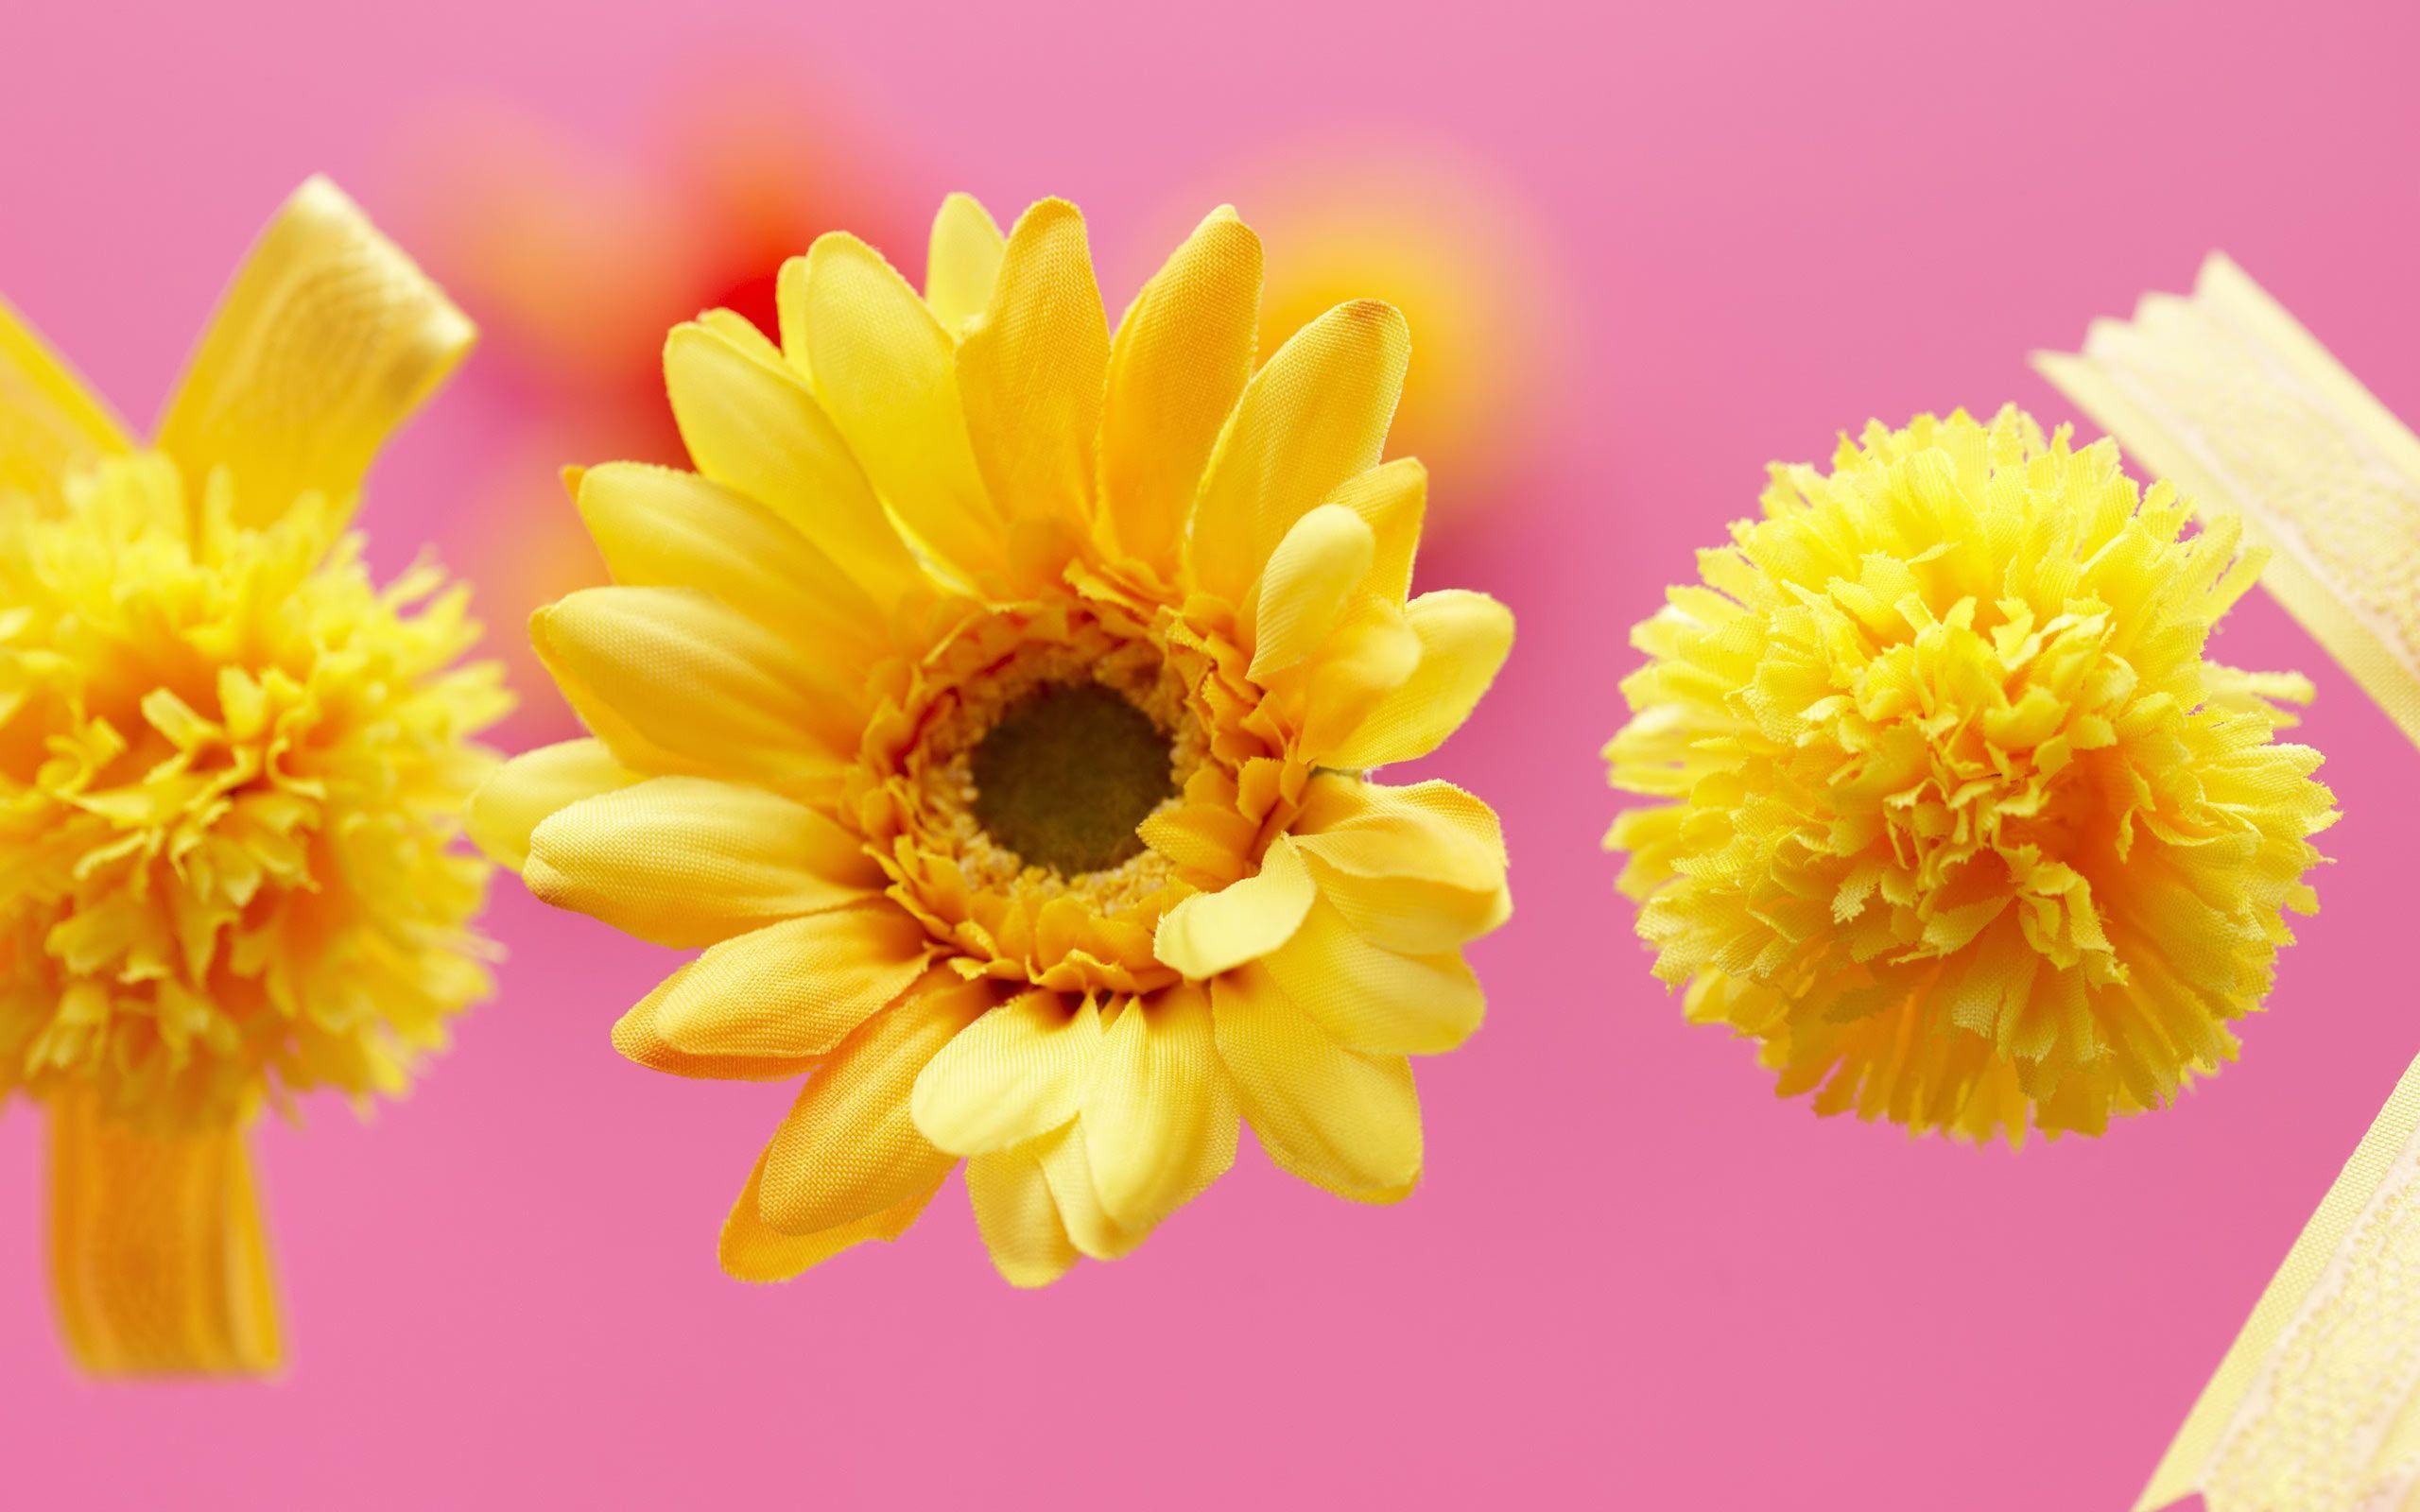 Desktop Wallpaper · Gallery · Windows 7 · Yellow flower wallpaper